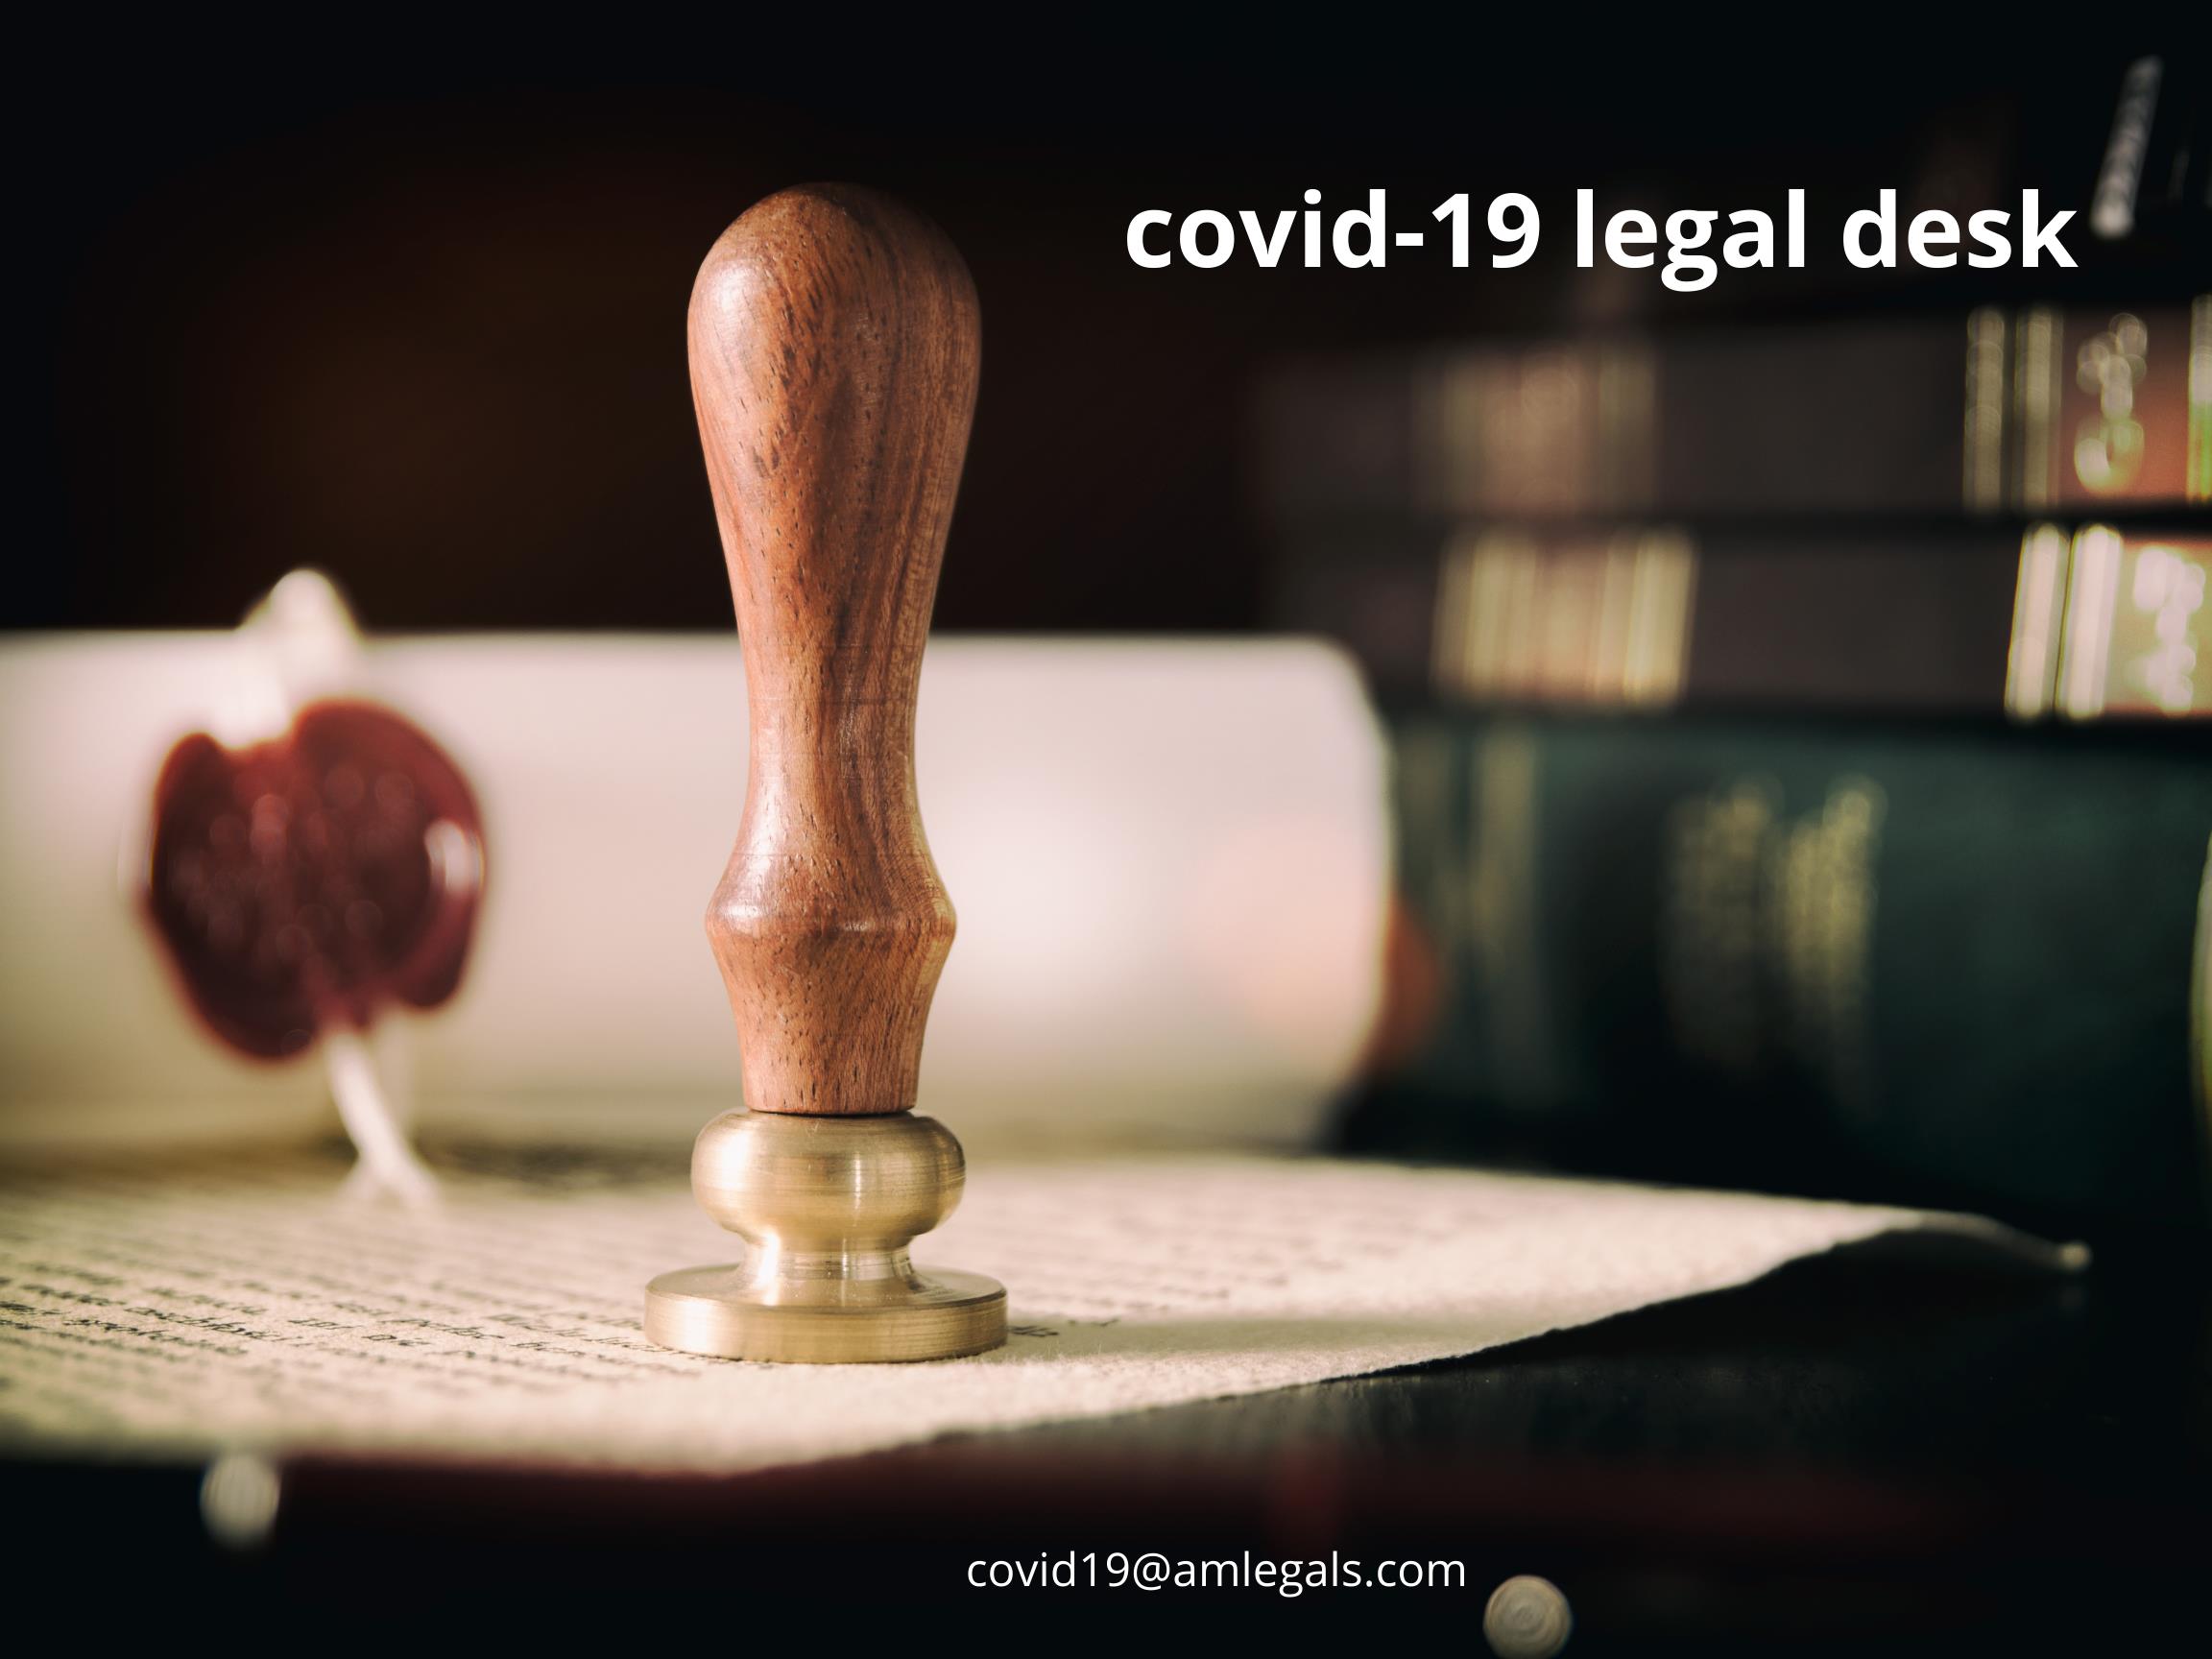 COVID-19 Legal Desk Task Force